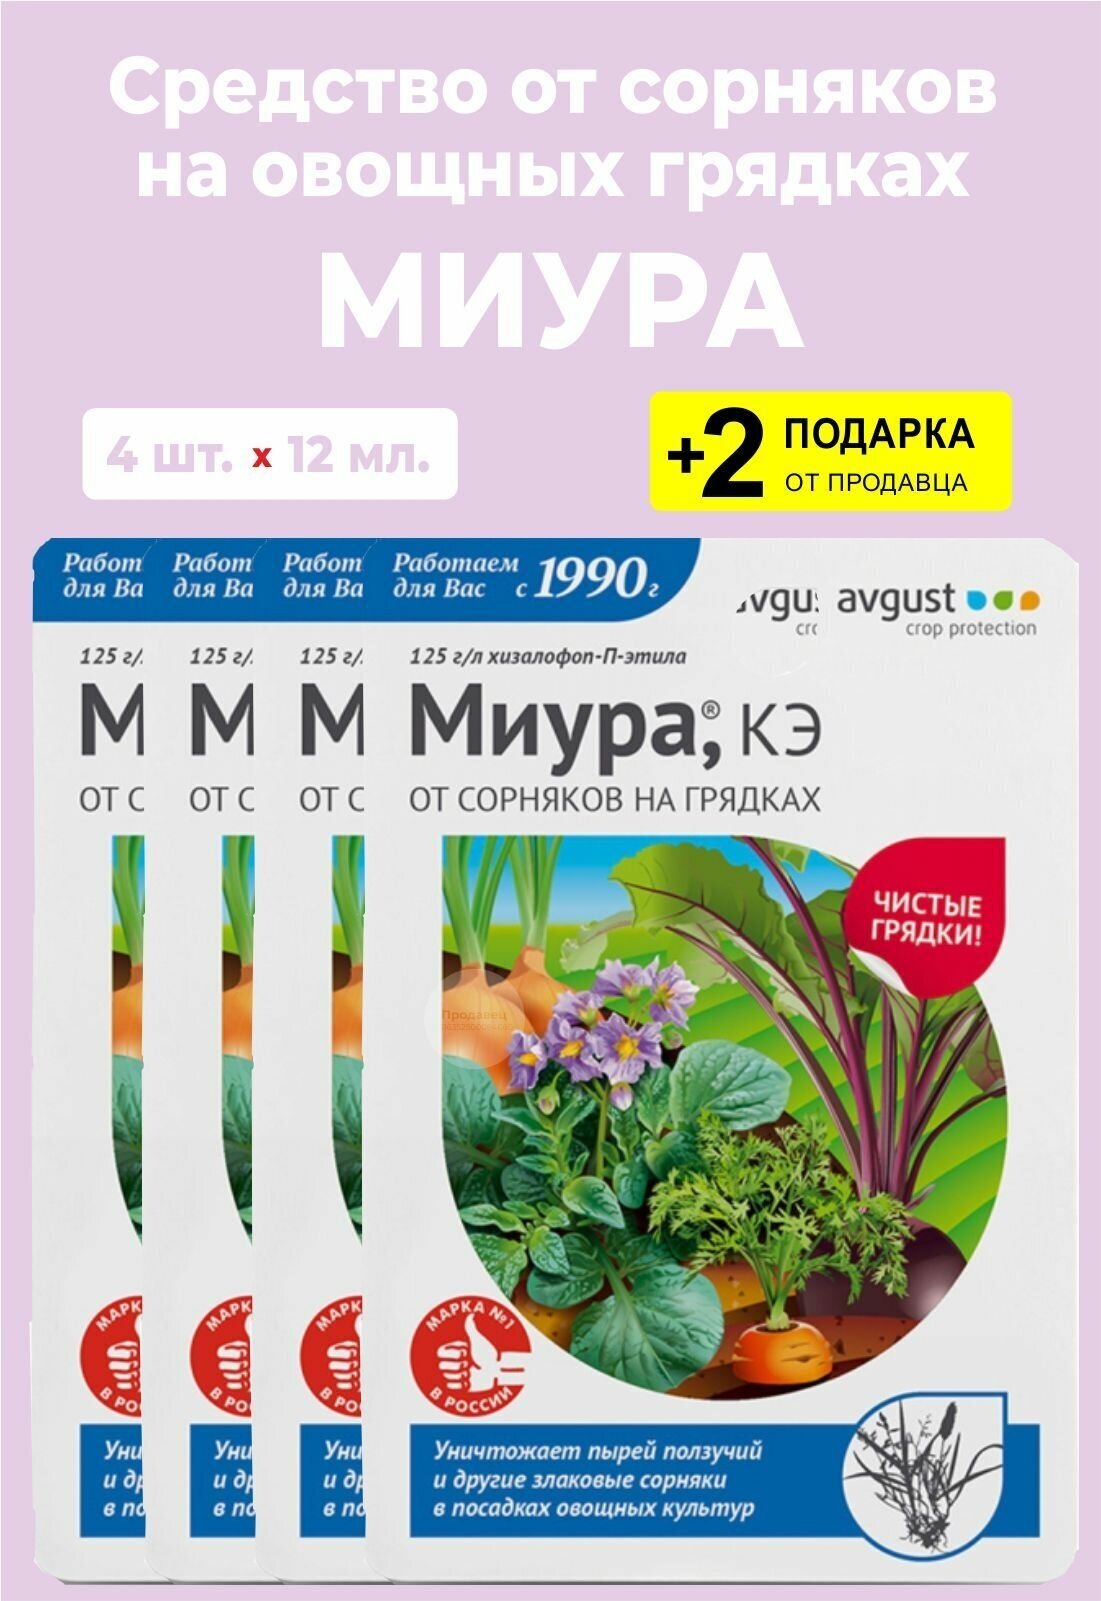 Средство от сорняков на грядках "Миура", 12 мл., 4 упаковки + 2 Подарка